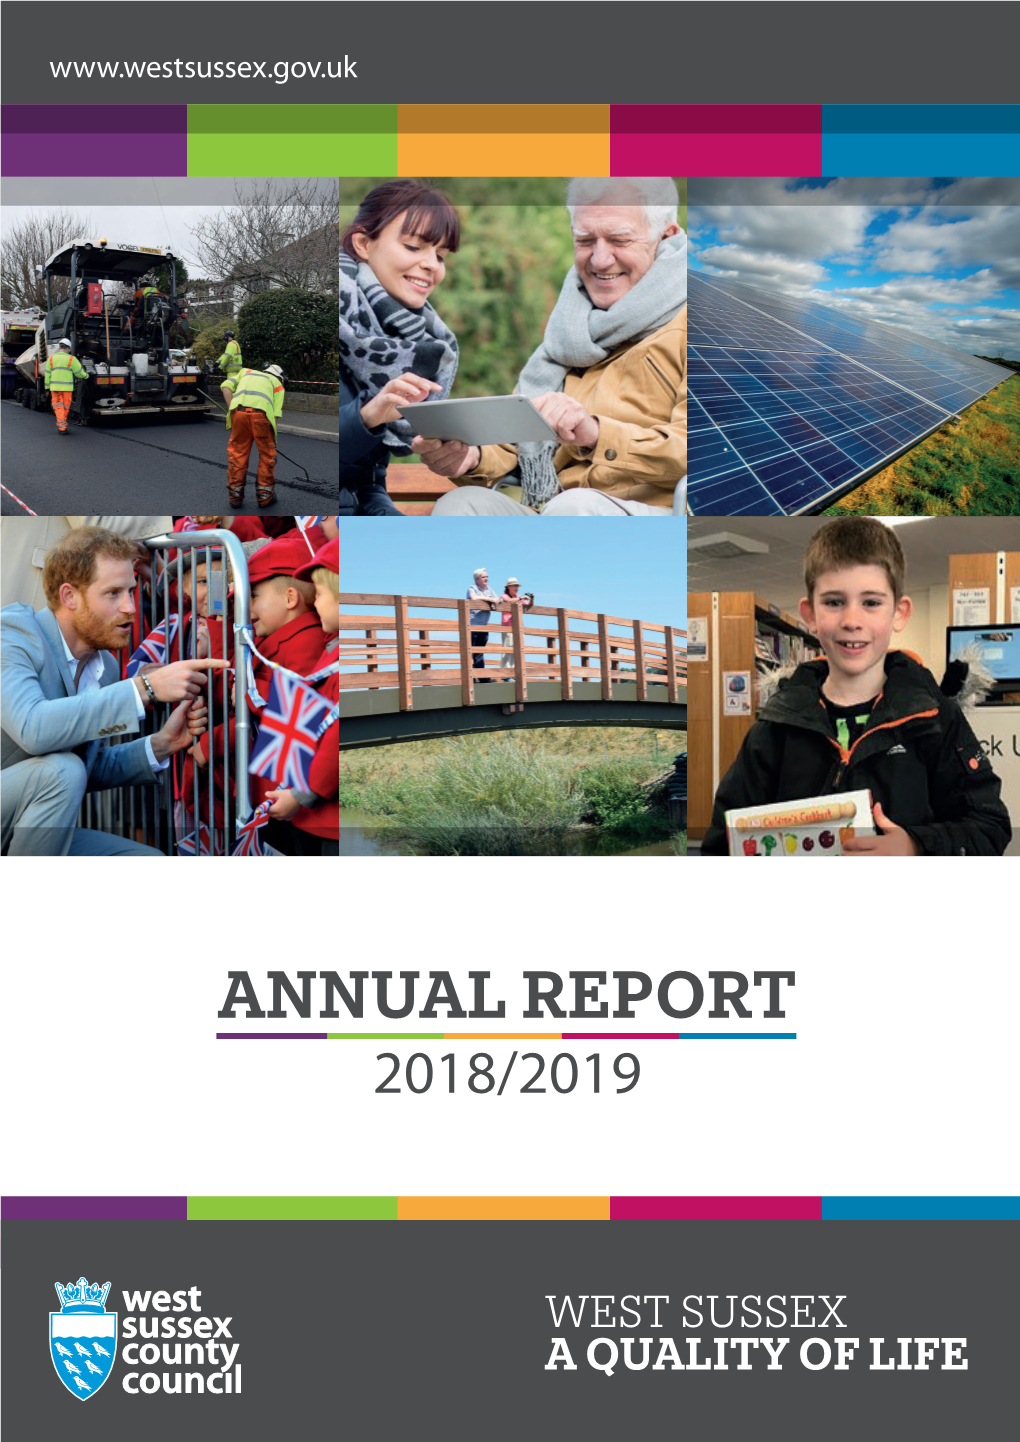 West Sussex Annual Report 2018/19